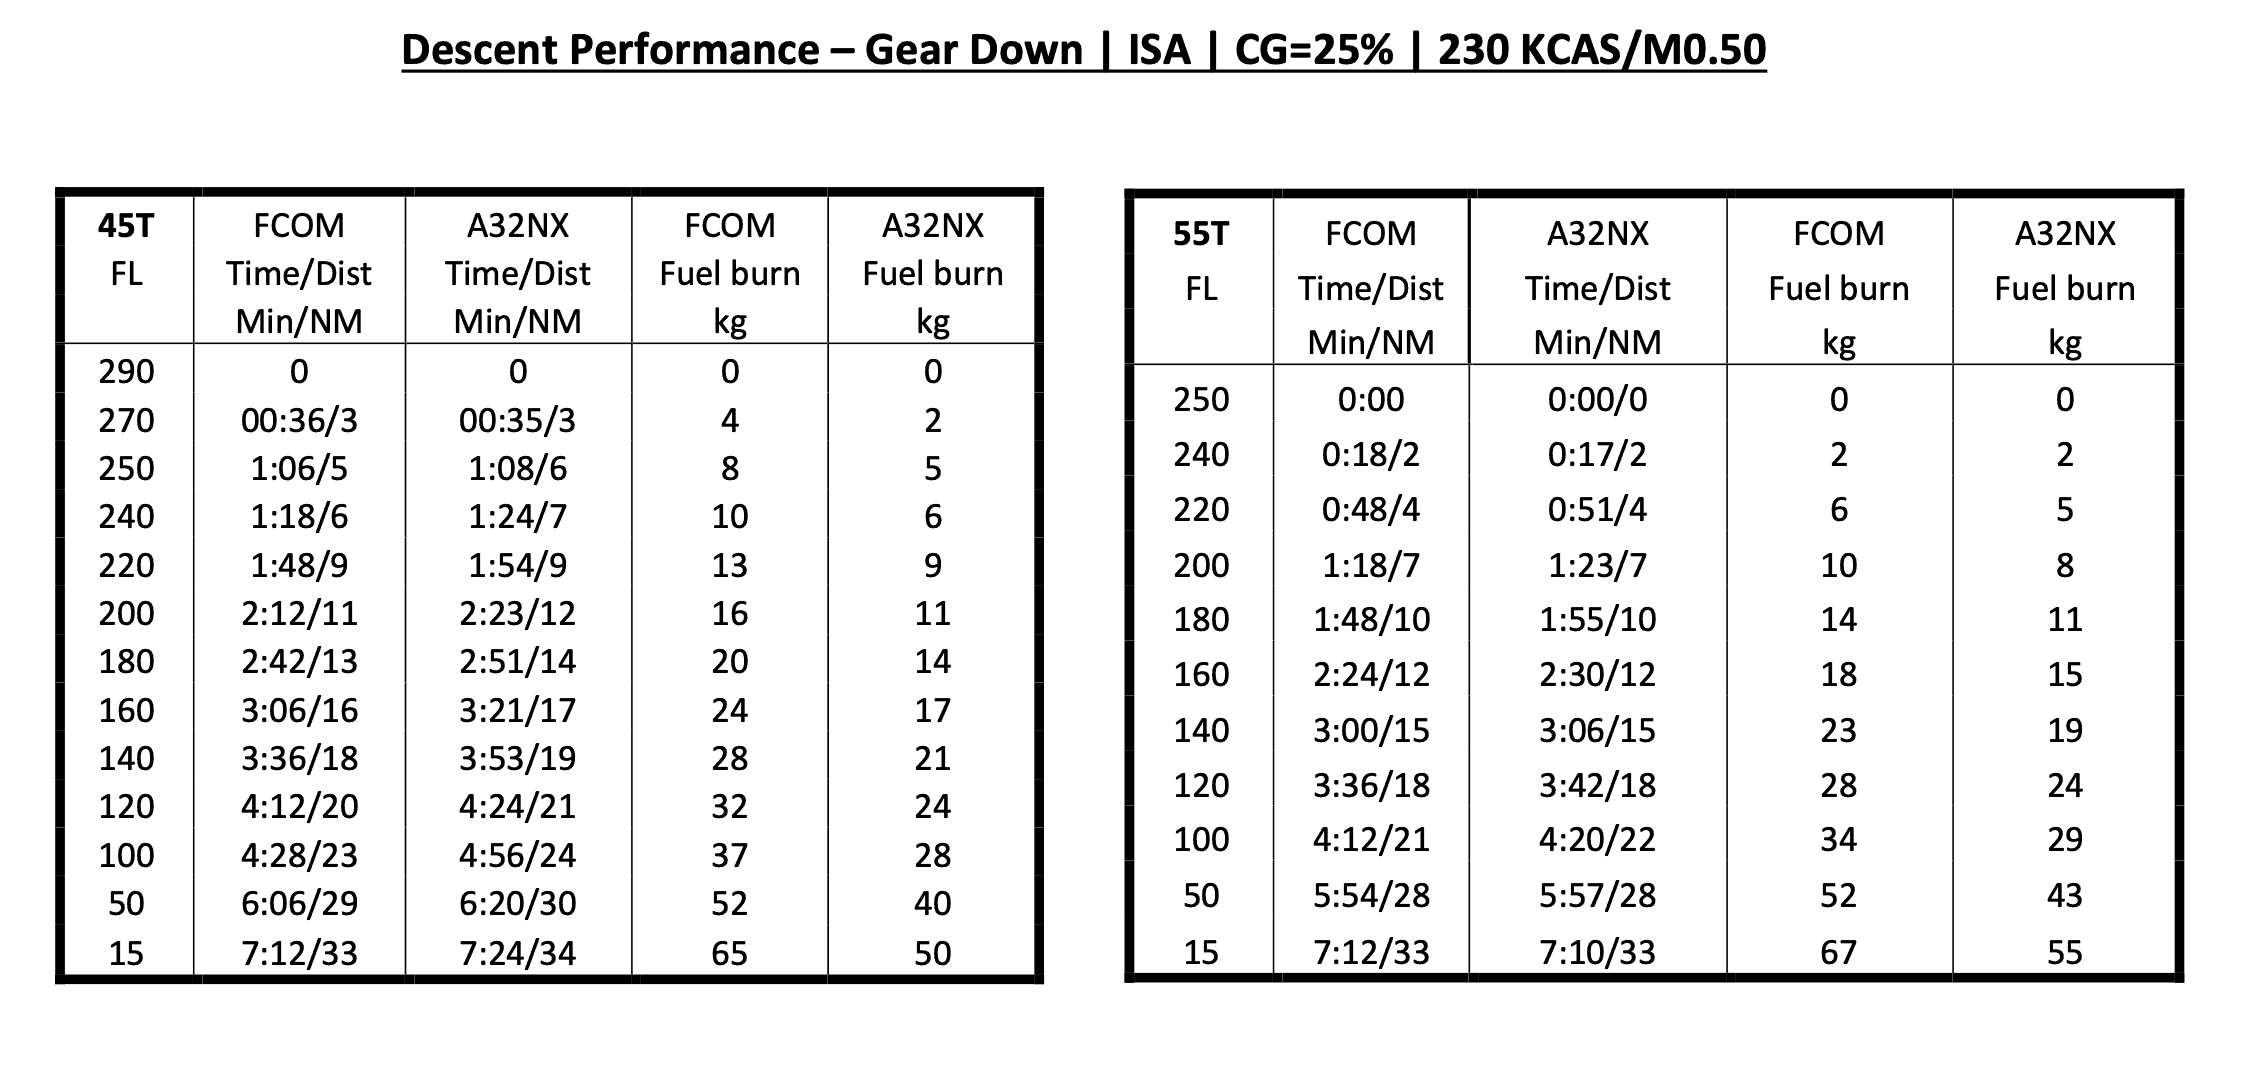 descent performance - gear down